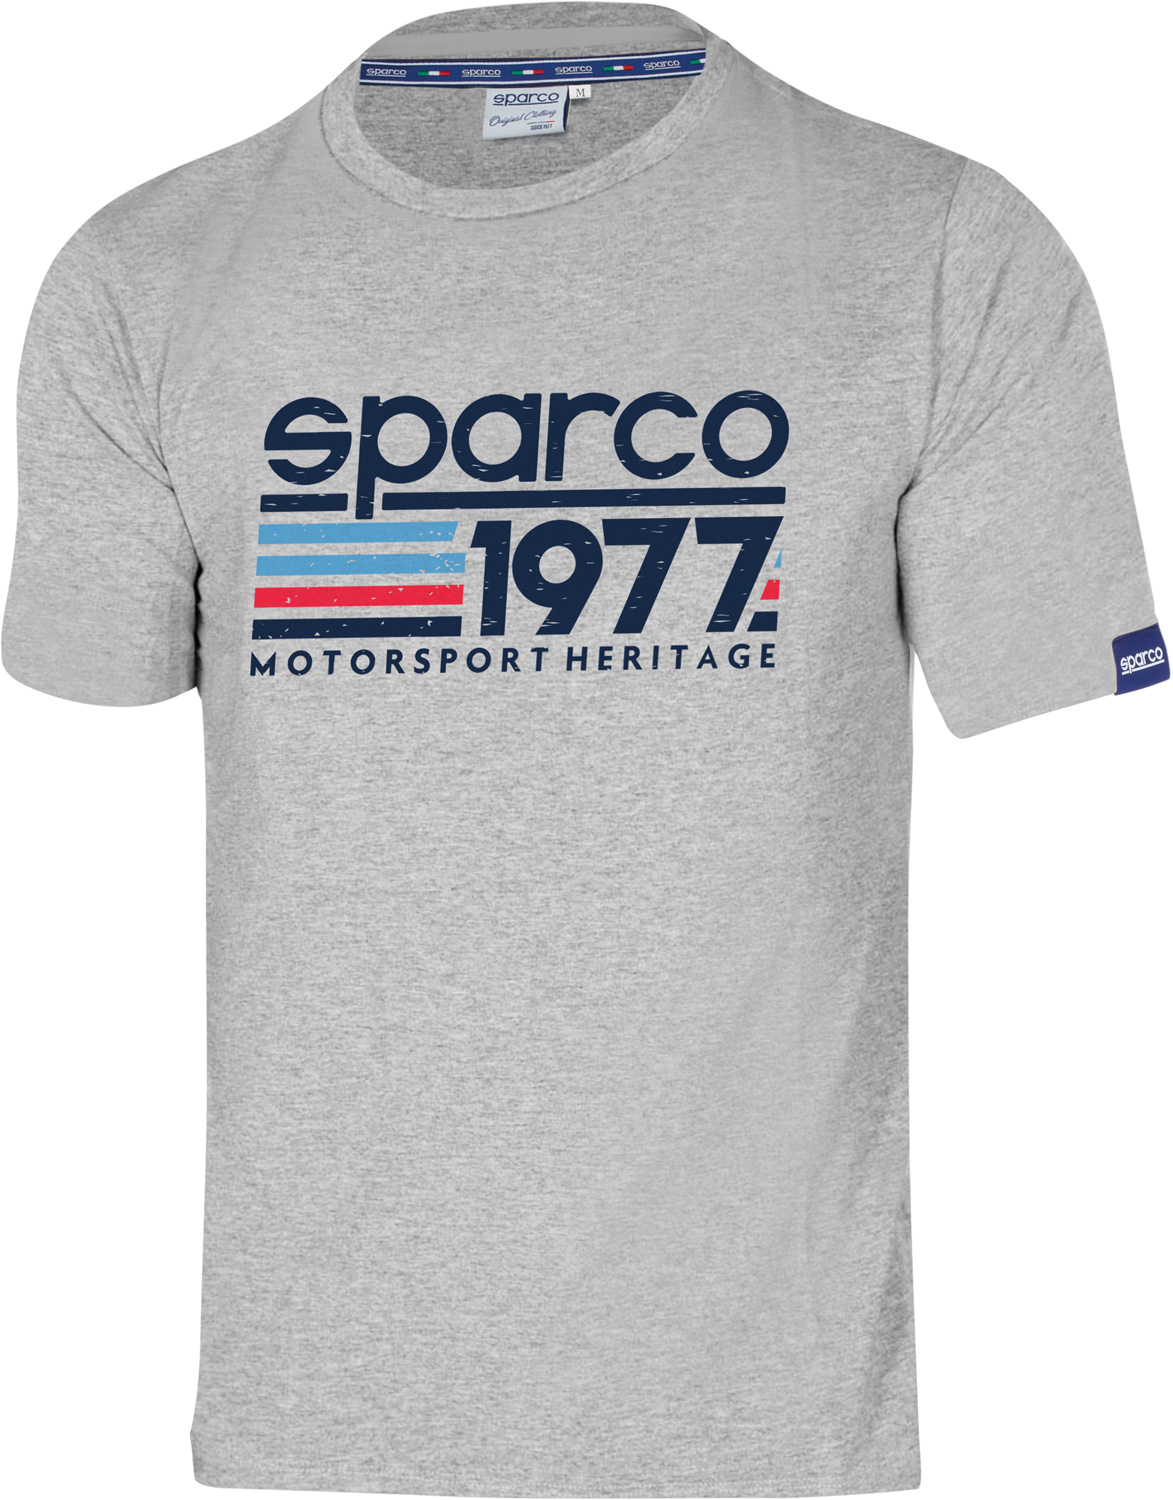 Sparco T-Shirt 1977